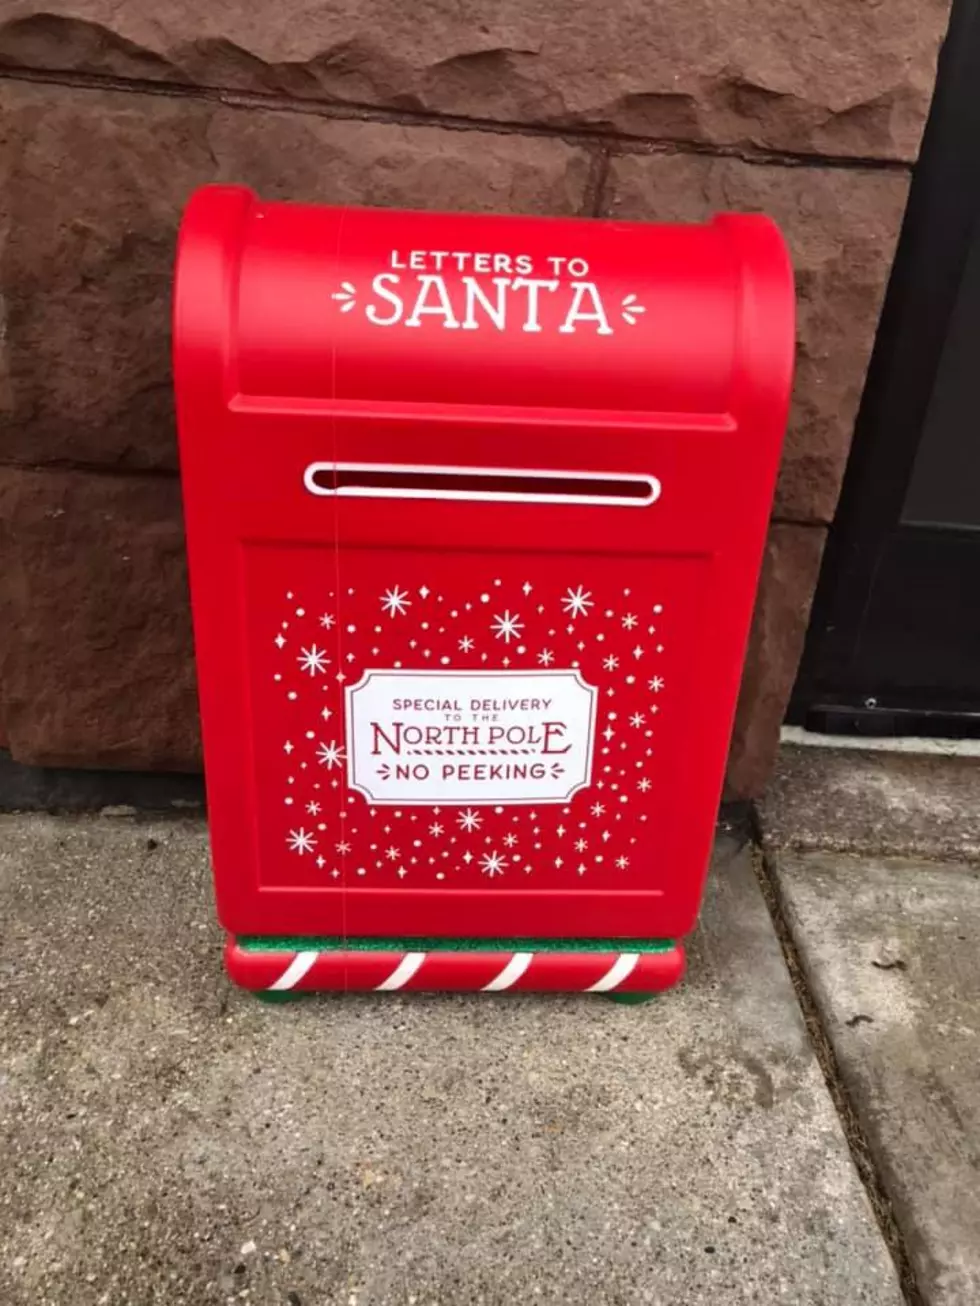 Santa Taps Dalton Police to Help Collect Letters to Santa